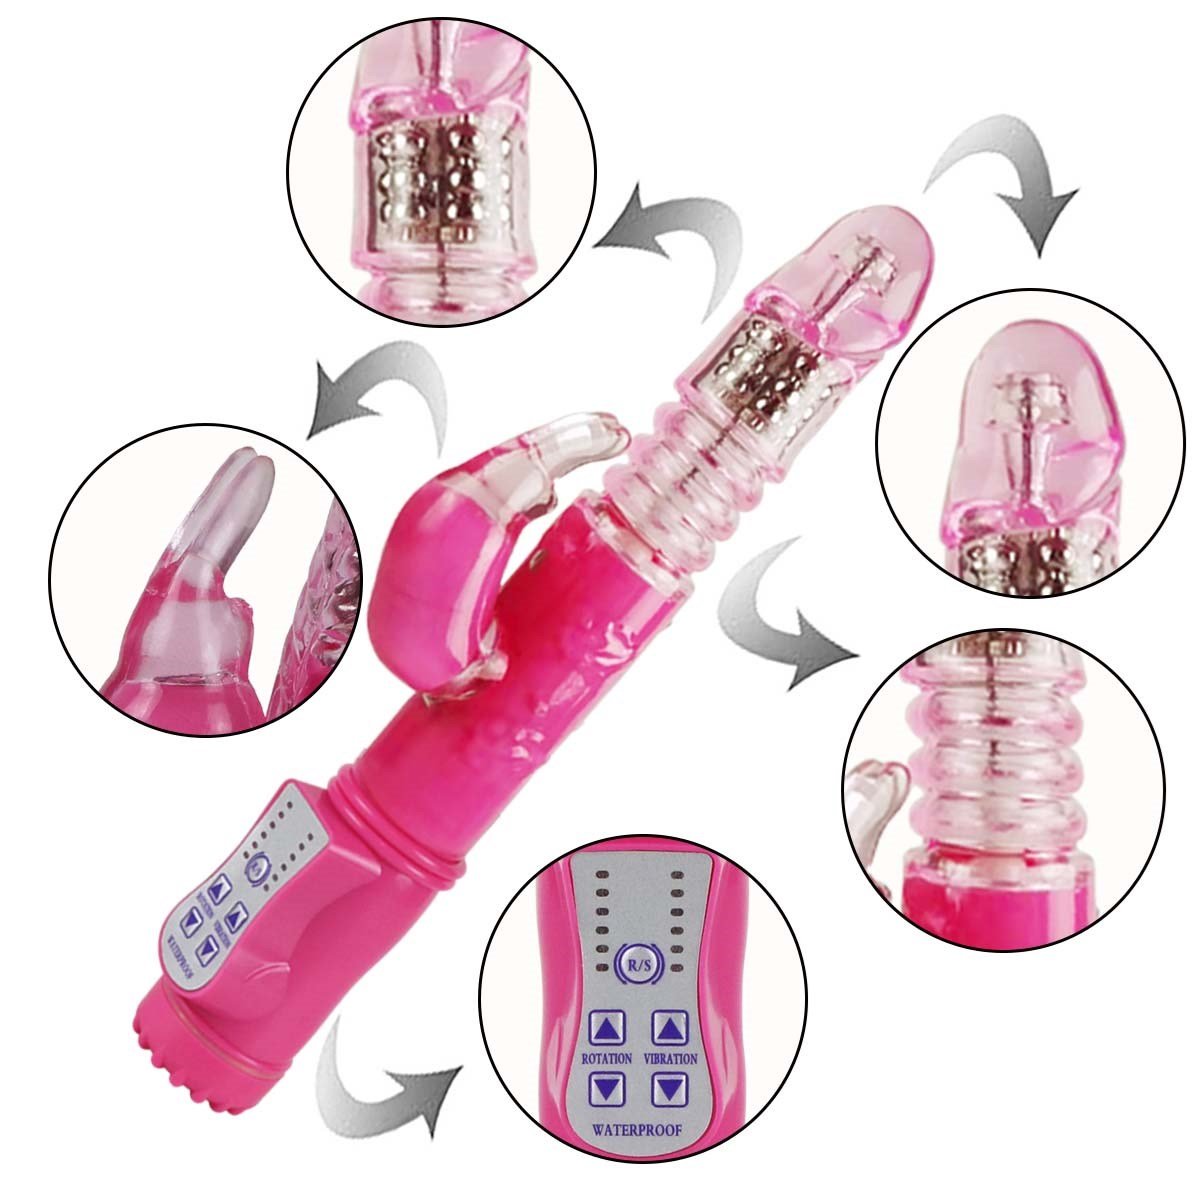 Pink Thrusting Rabbit Vibrator